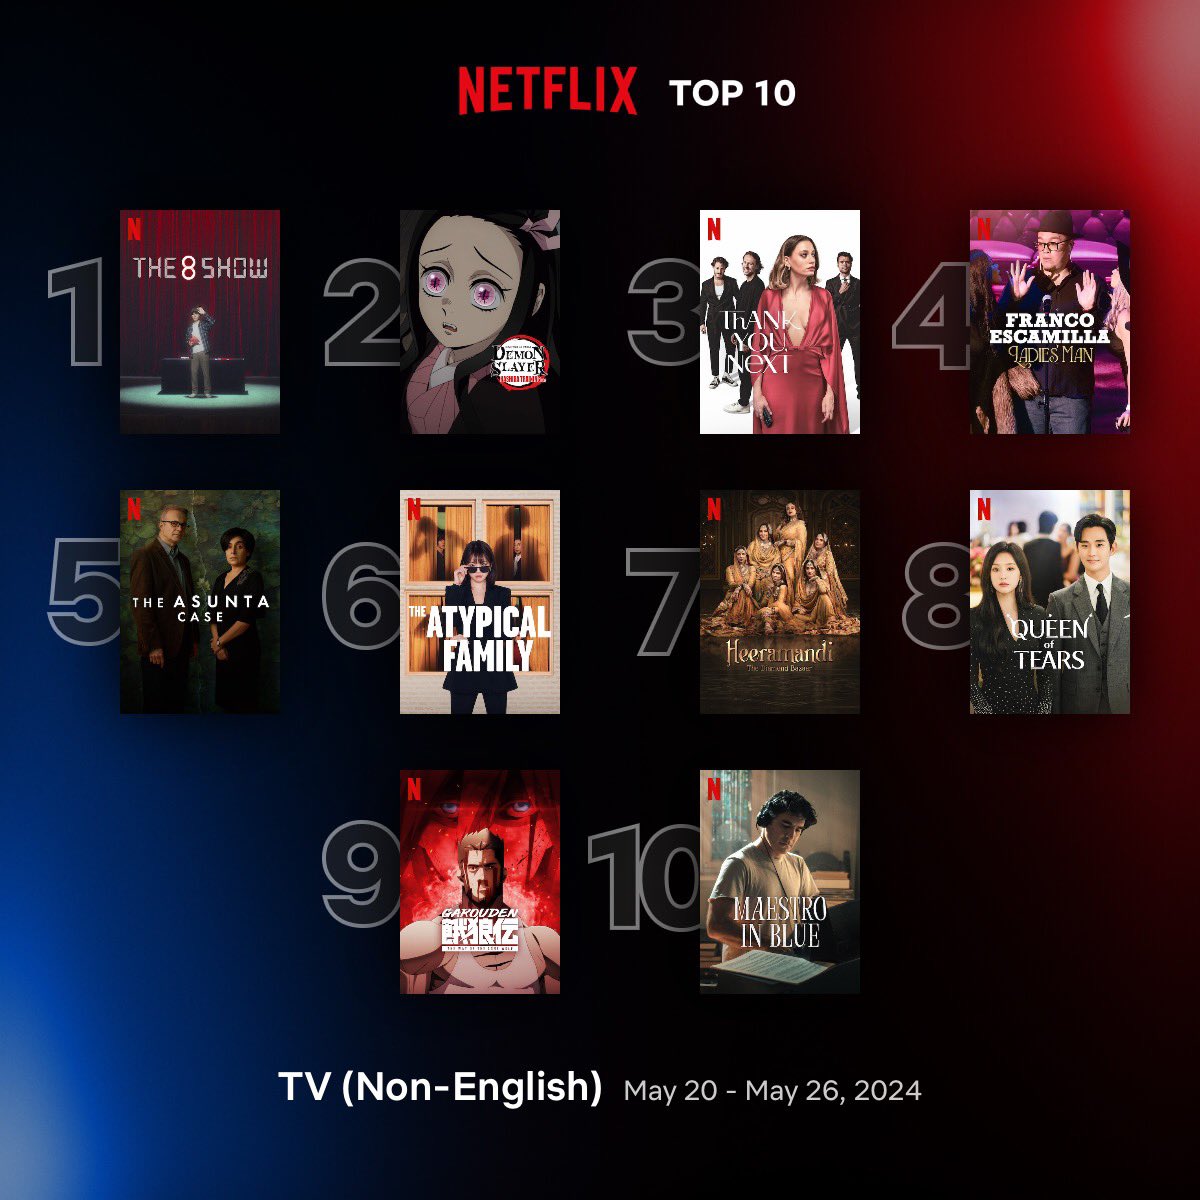 Global Top 10 Non-English TV Series on Netflix between 20 - 26 May 1. #The8Show 🇰🇷 2. #DemonSlayer: Kimetsu no Yaiba: Hashira Training Arc 🇯🇵 3. #ThankYouNext 🇹🇷 4. #FrancoEscamilla: Ladies' man 🇲🇽 5. #TheAsuntaCase 🇪🇸 6. #TheAtypicalFamily 🇰🇷 7. #Heeramandi 🇮🇳 8. #QueenOfTears